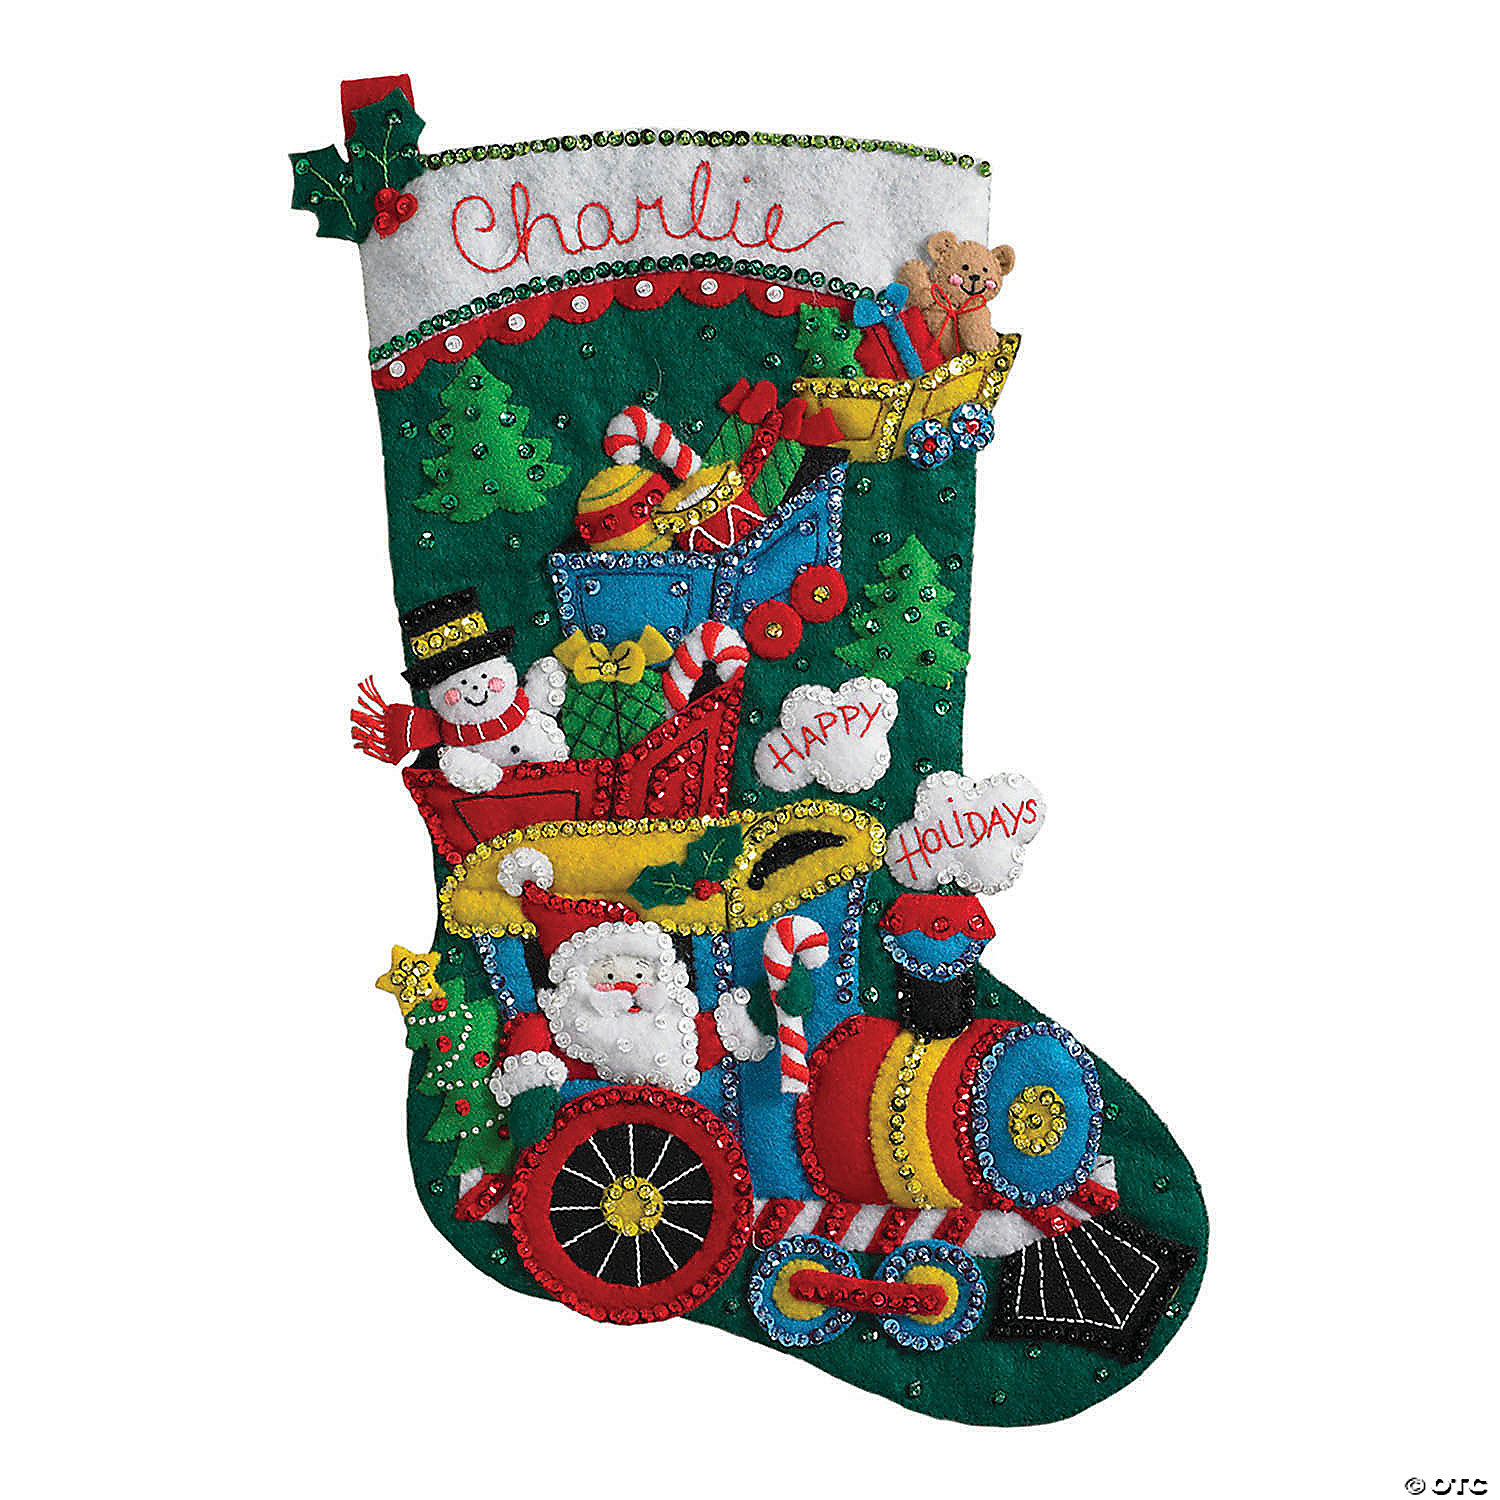 Bucilla Felt Stocking Applique Kit 18 Long-Classic Christmas